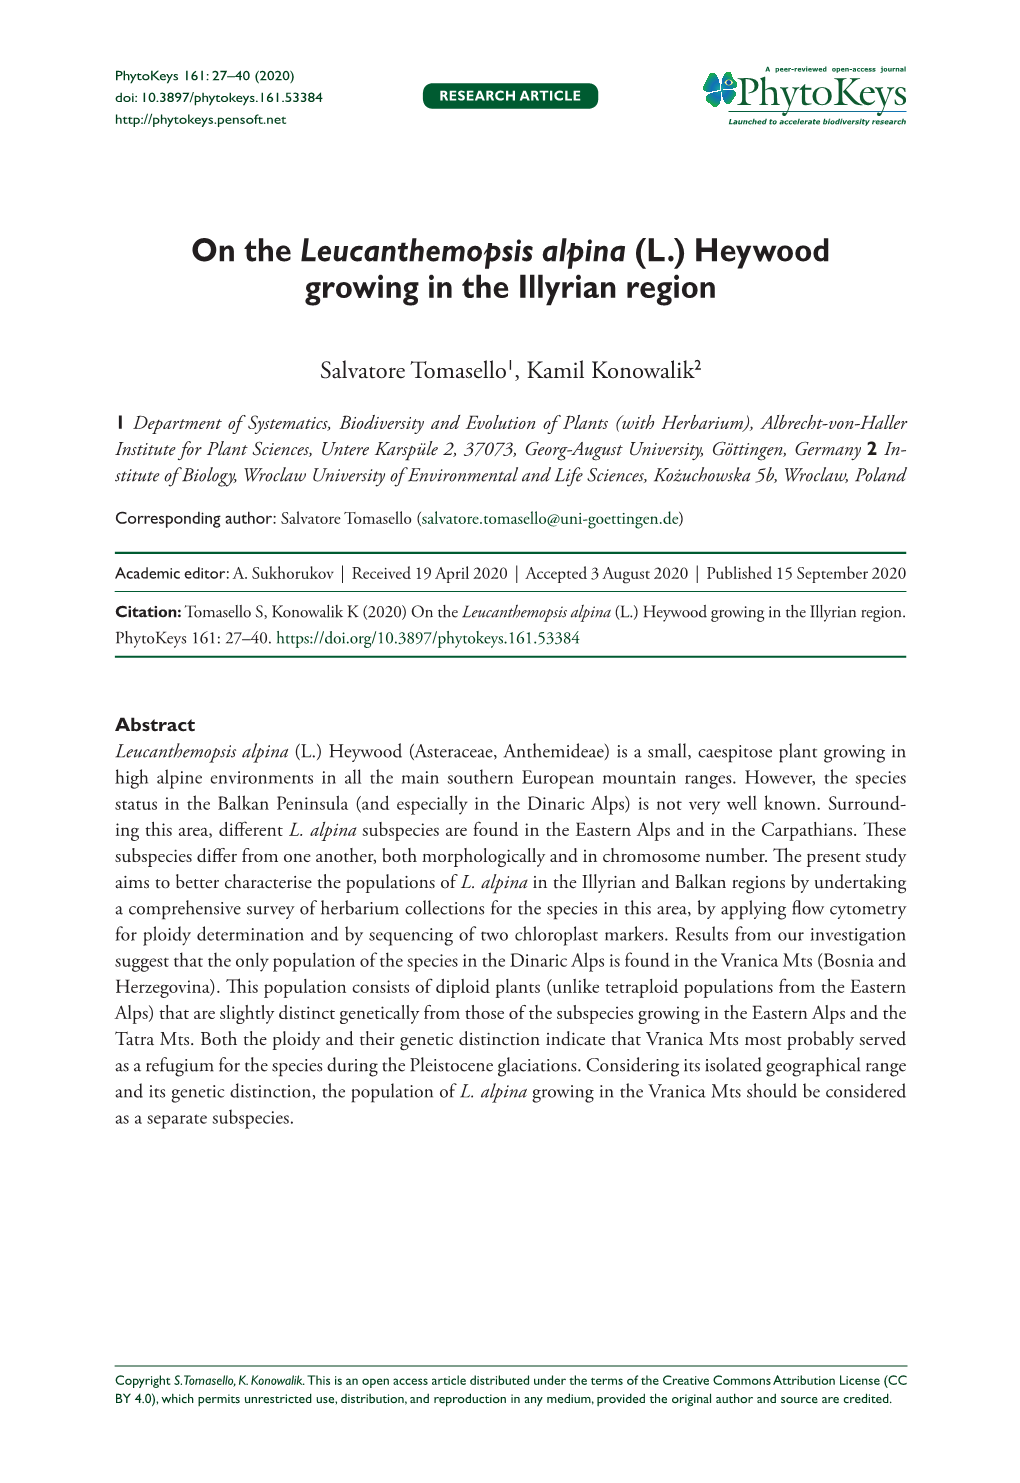 On the Leucanthemopsis Alpina (L.) Heywood Growing in the Illyrian Region